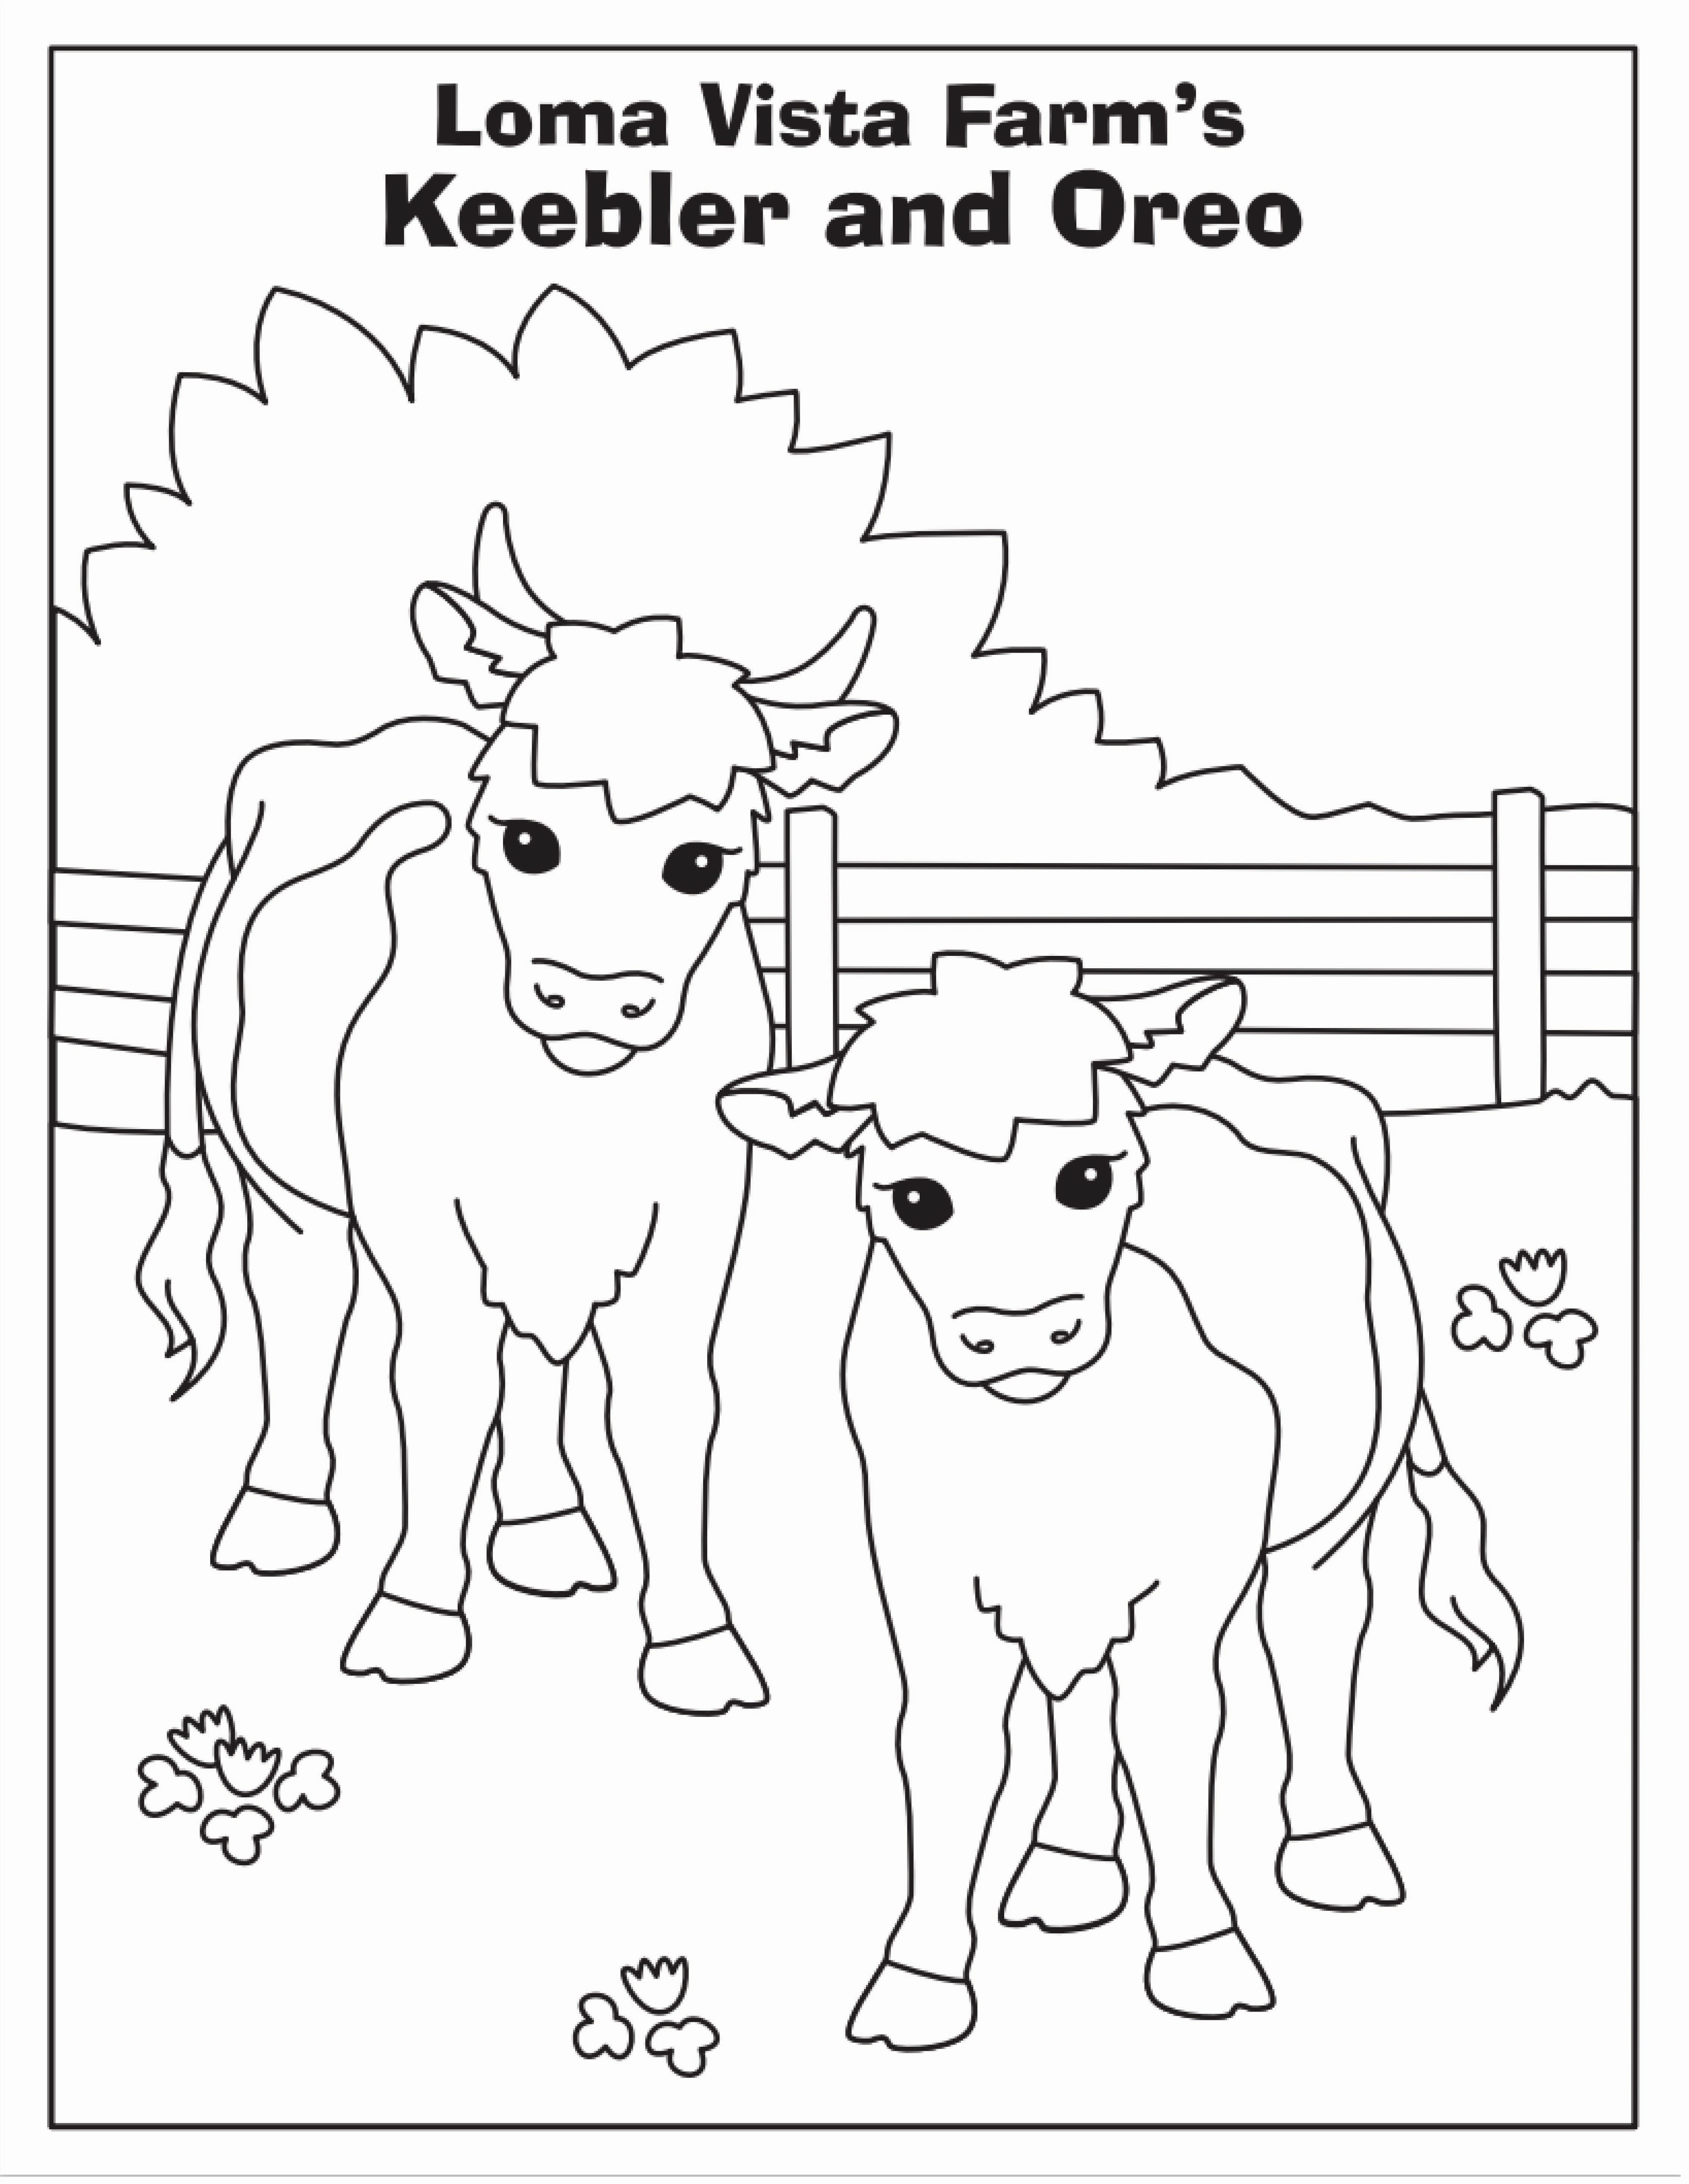 Keebler and Oreo Coloring Sheet for Loma Vista Farm, Vallejo